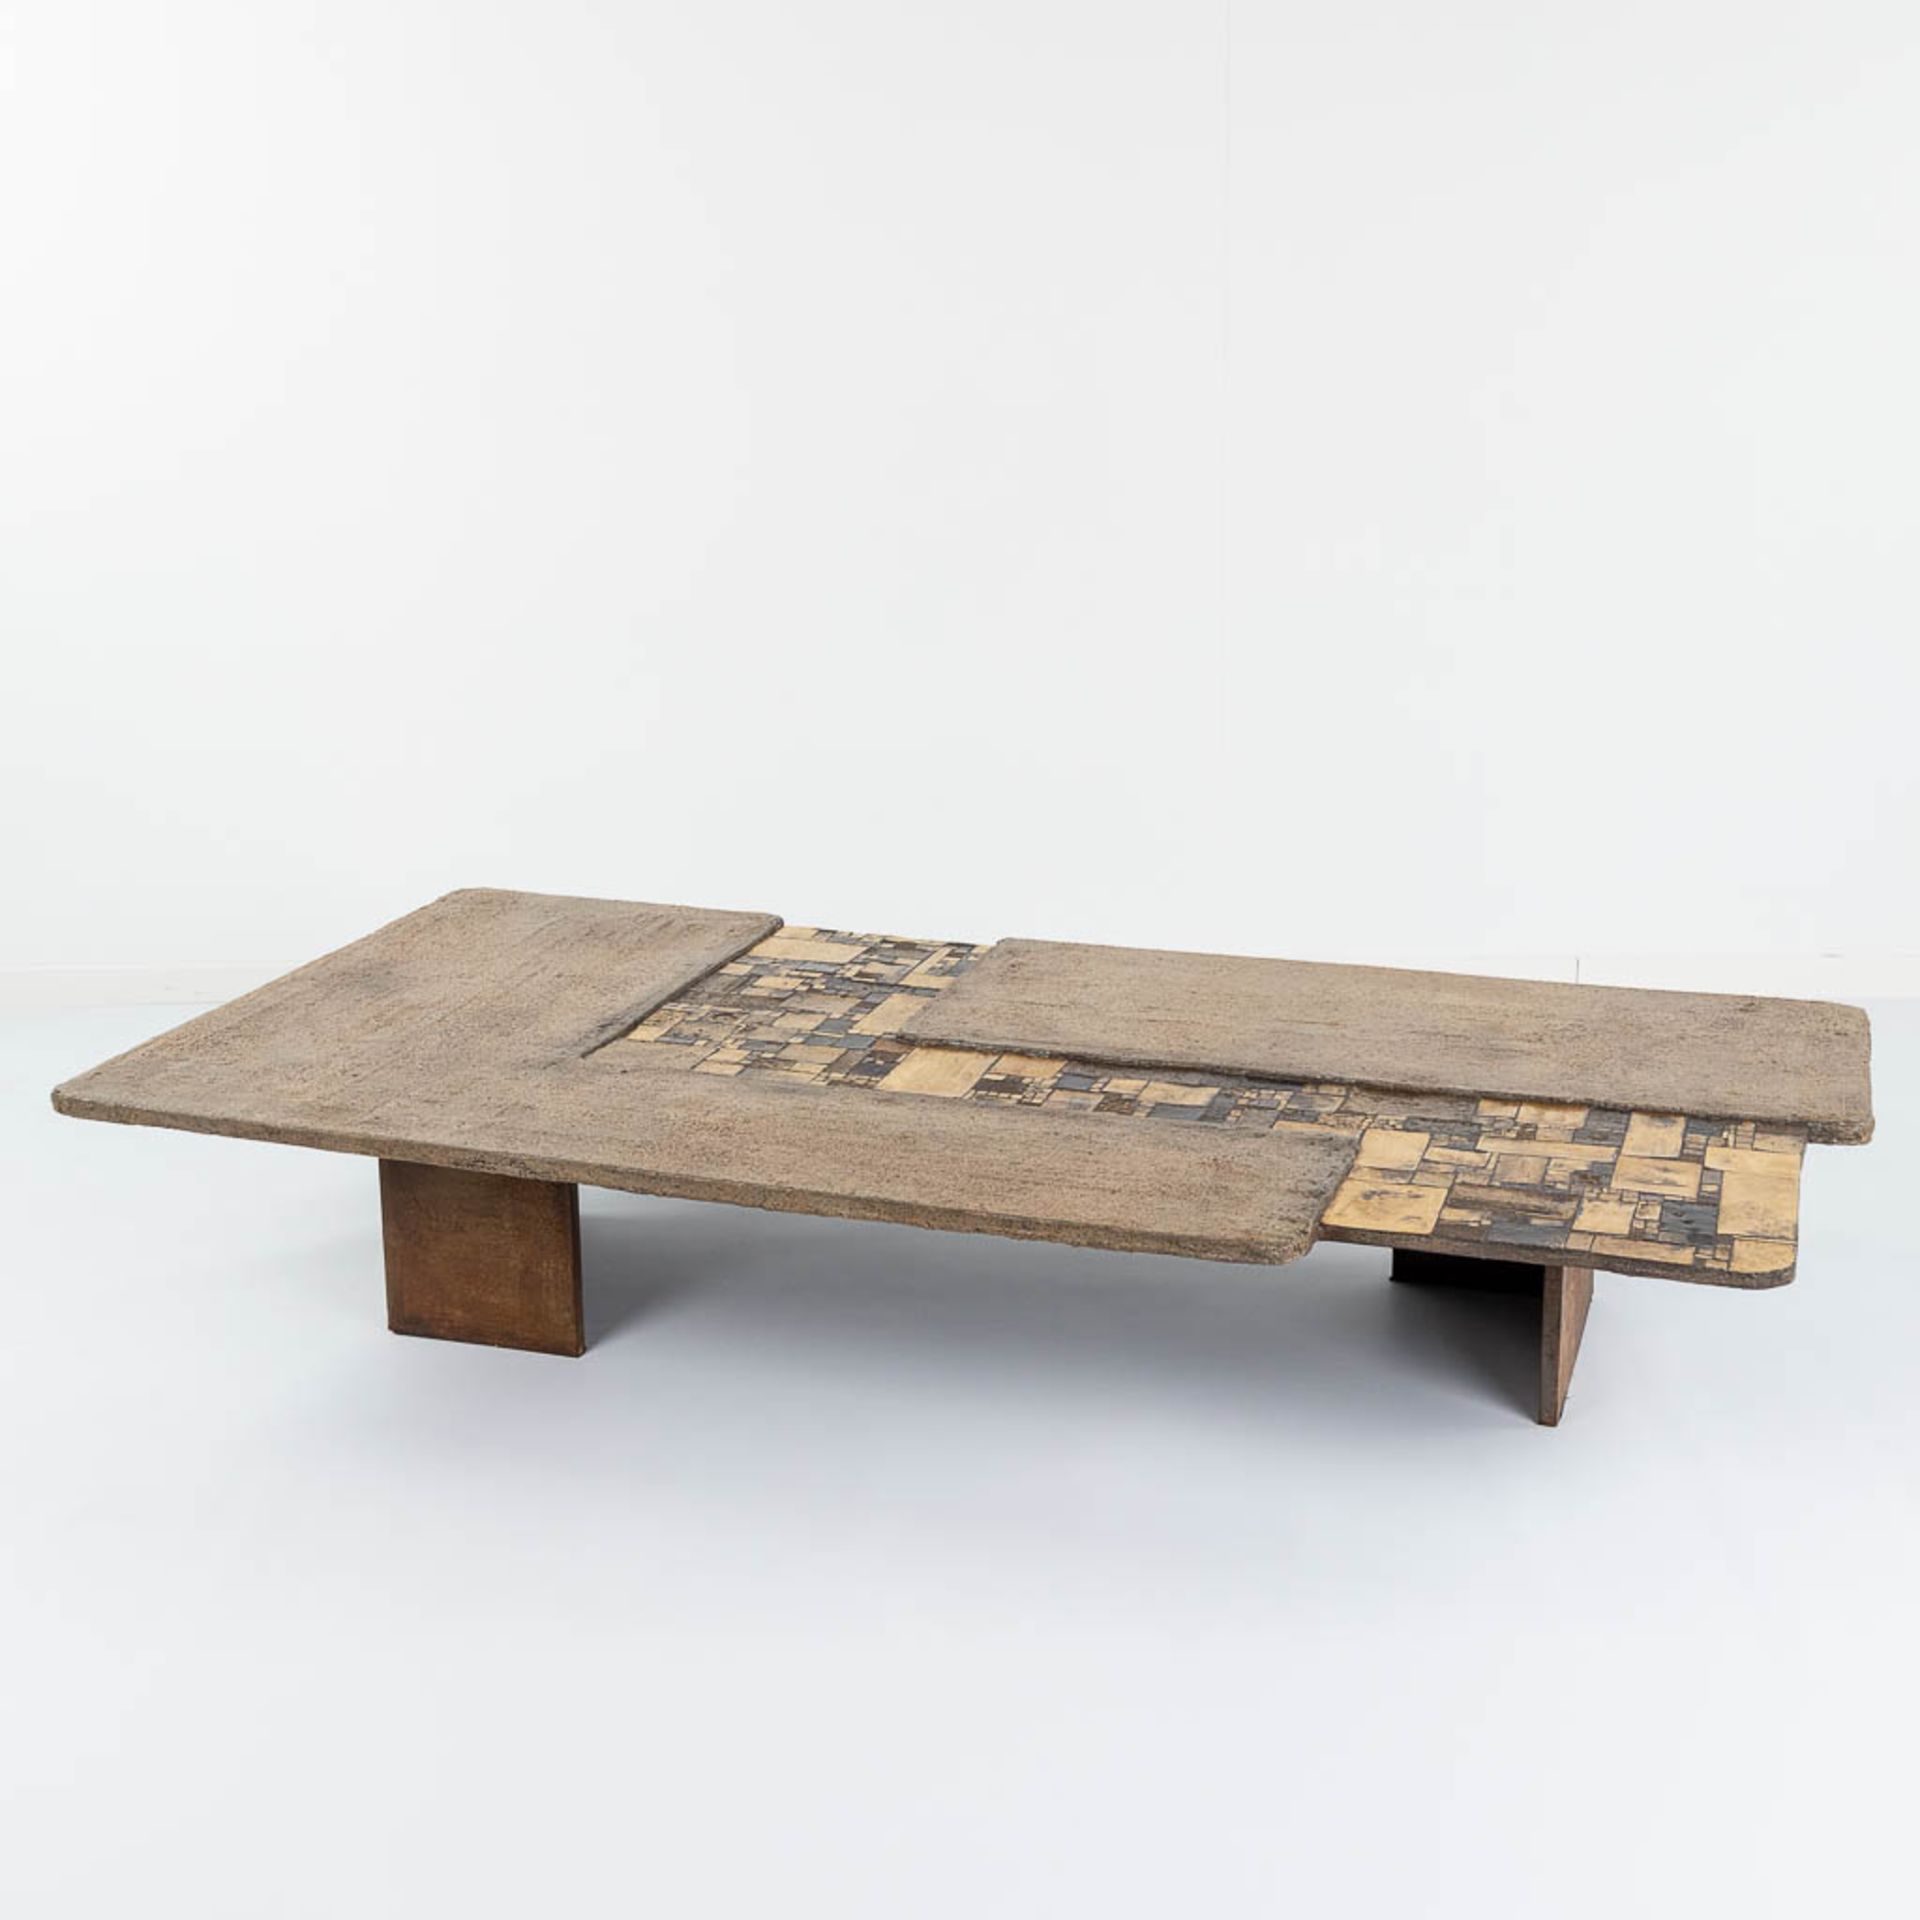 Pia MANU (XX) 'Coffee Table' gold glaze tiles and ceramics. Circa 1960. (L: 86 x W: 175 x H: 32 cm)